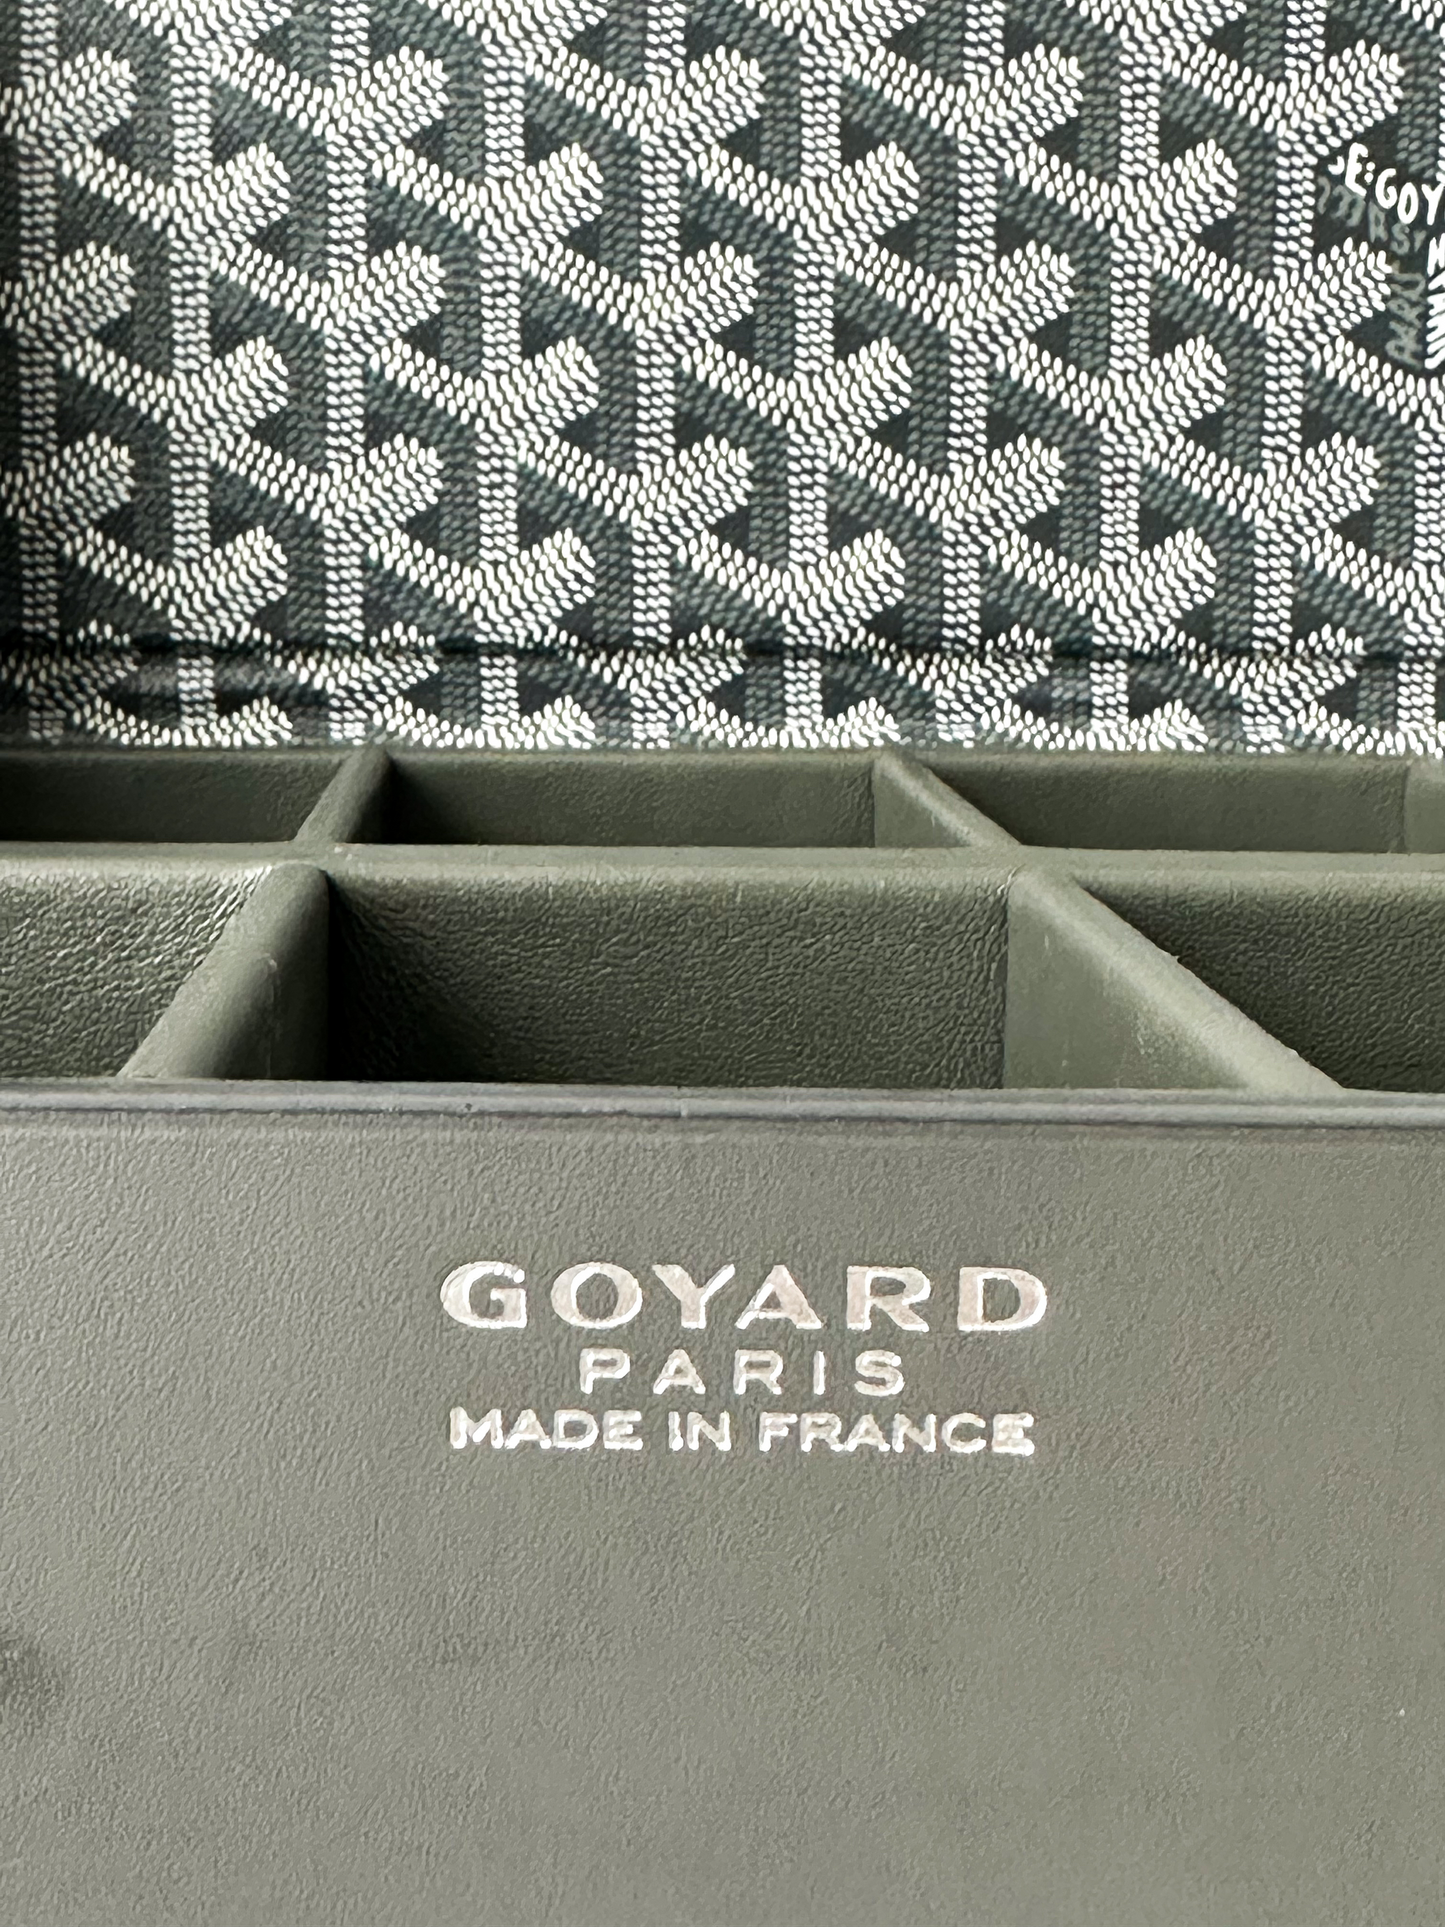 Goyard Coffret Montres 6-Watch Box - Red Decorative Accents, Decor &  Accessories - GOY25631